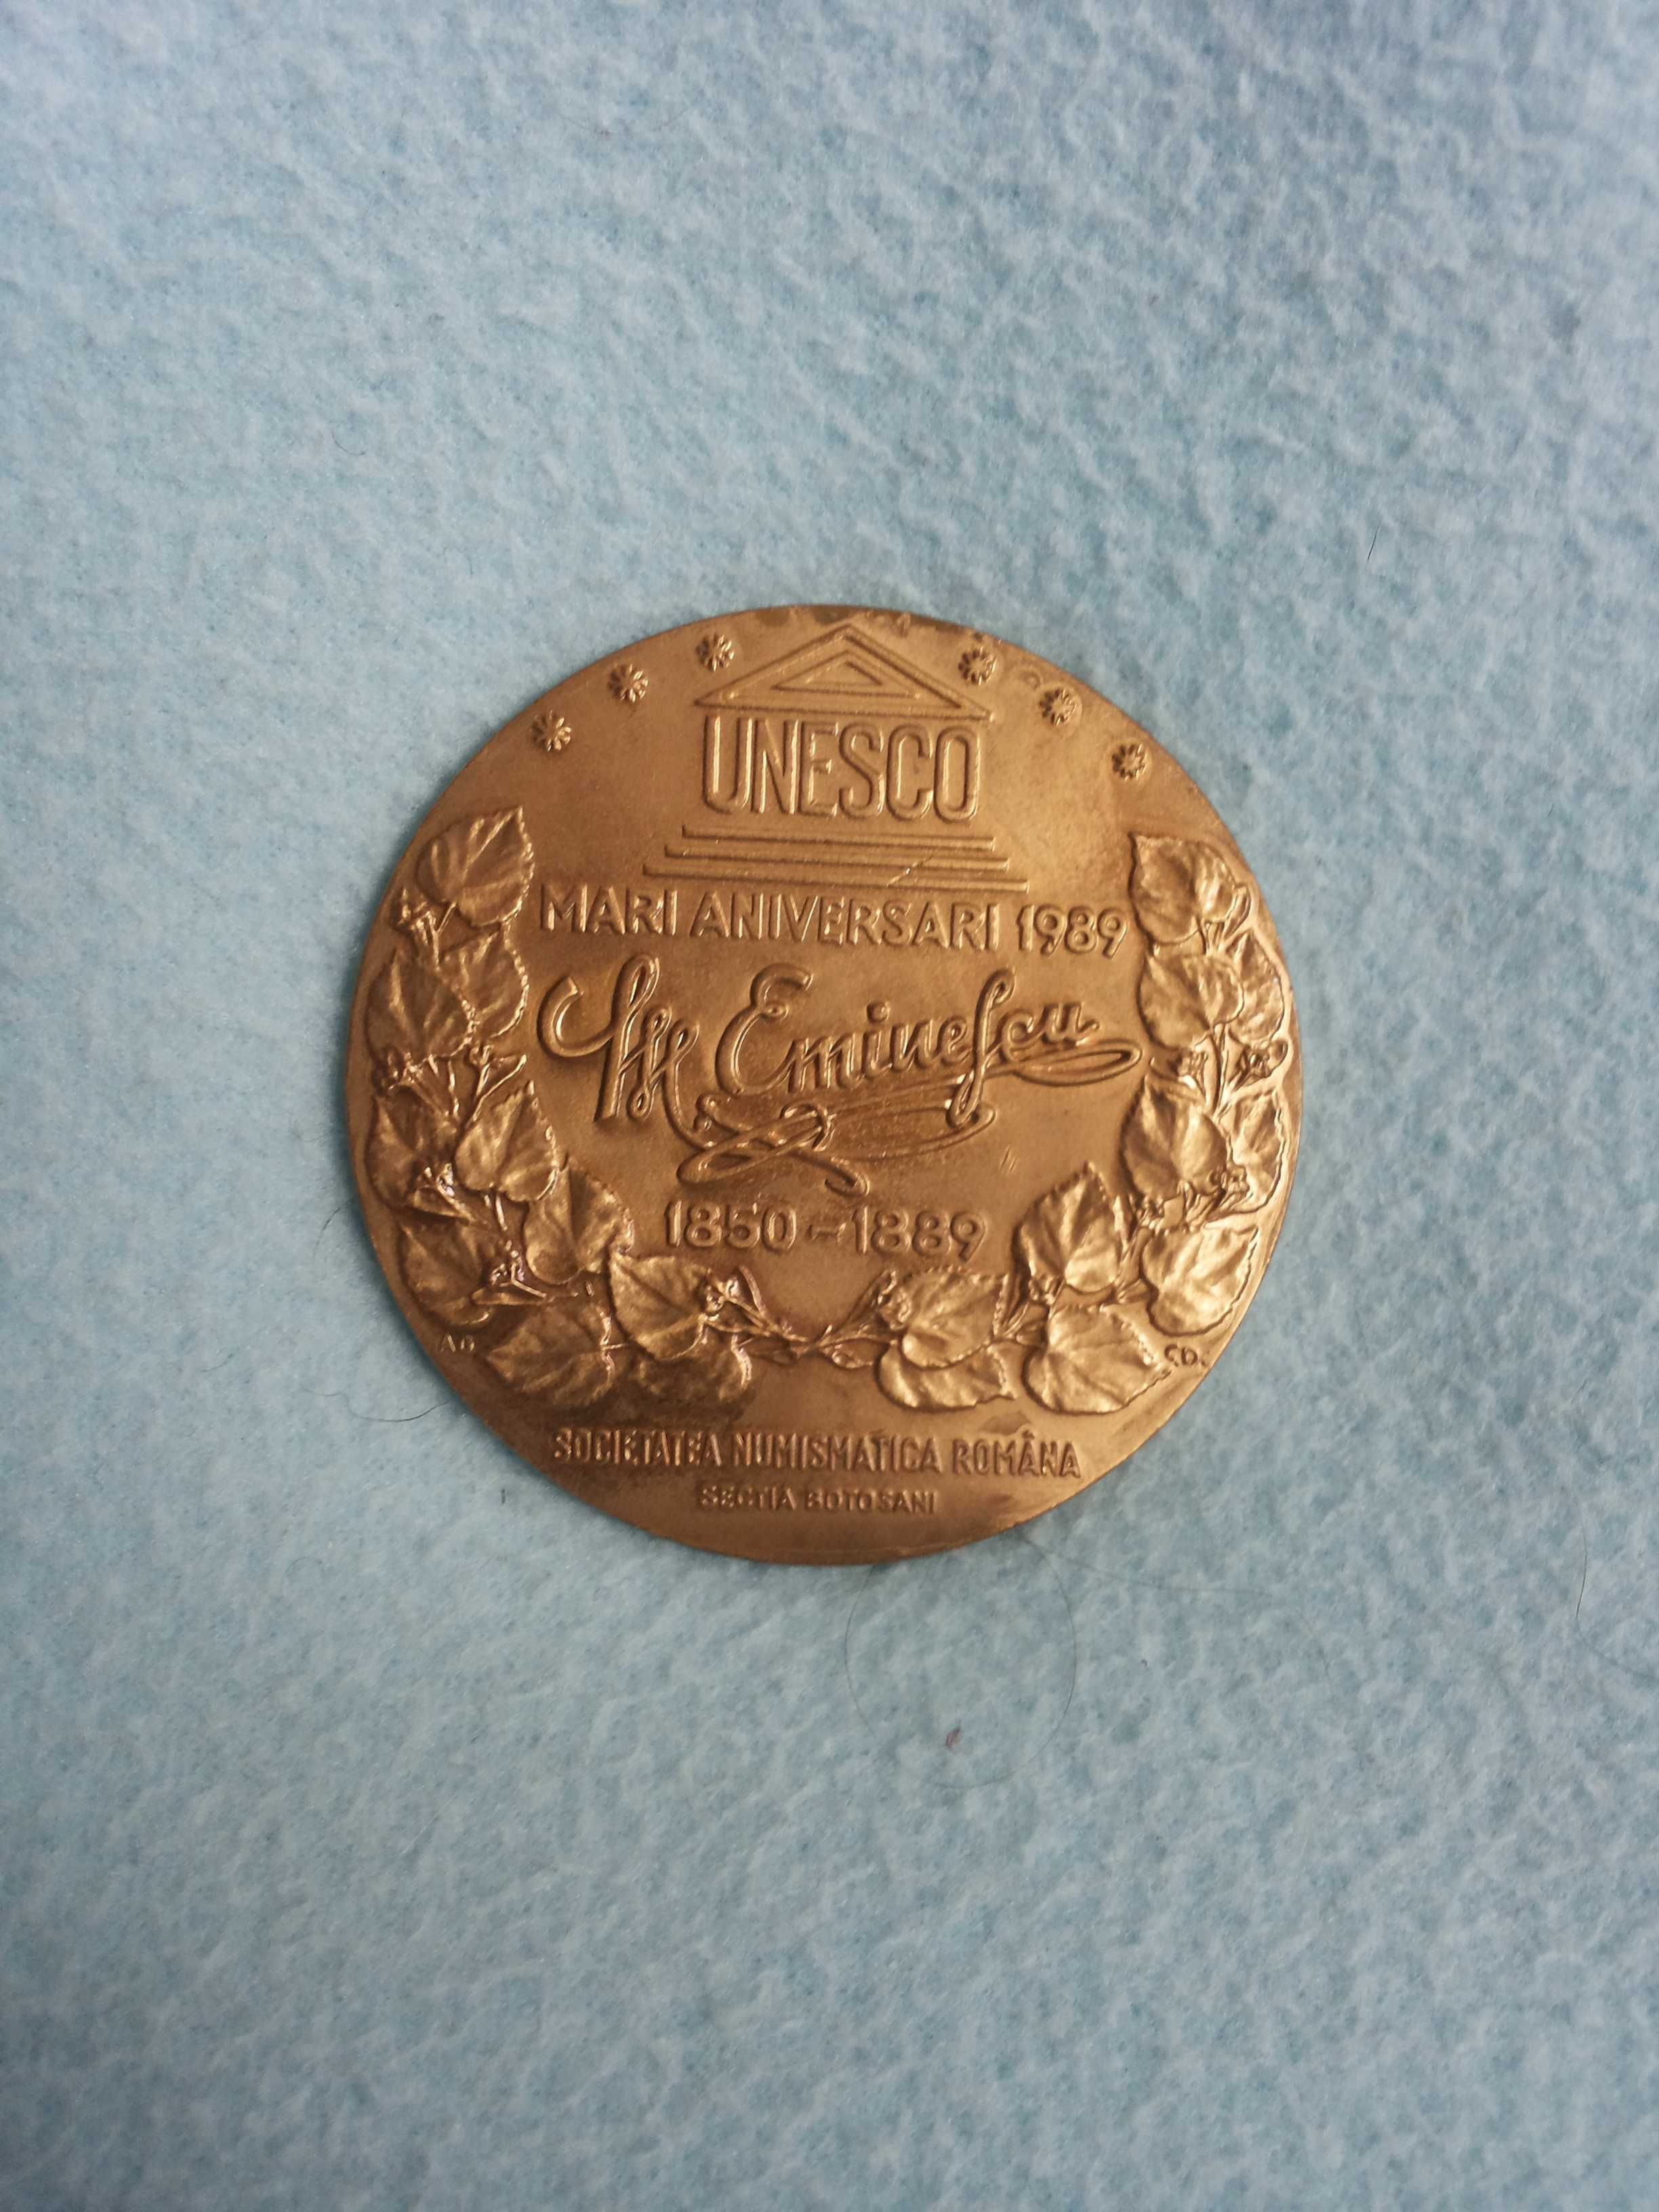 Medalie Mihai Eminescu 1989 "Mari aniversari UNESCO"